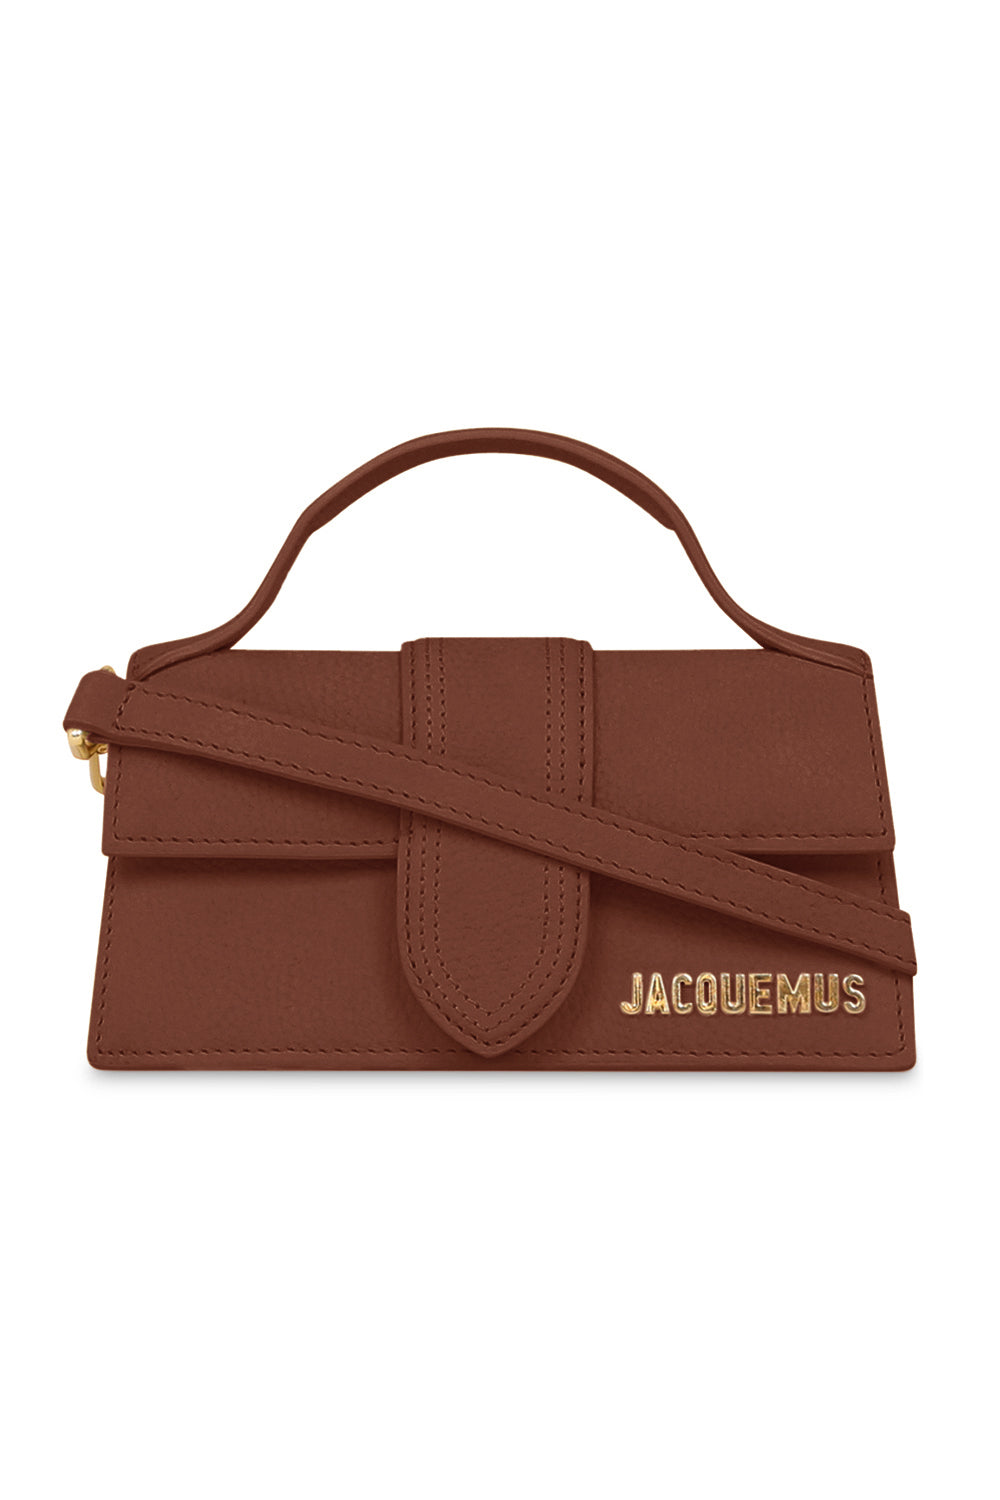 JACQUEMUS BAGS BROWN LE BAMBINO BAG | BROWN